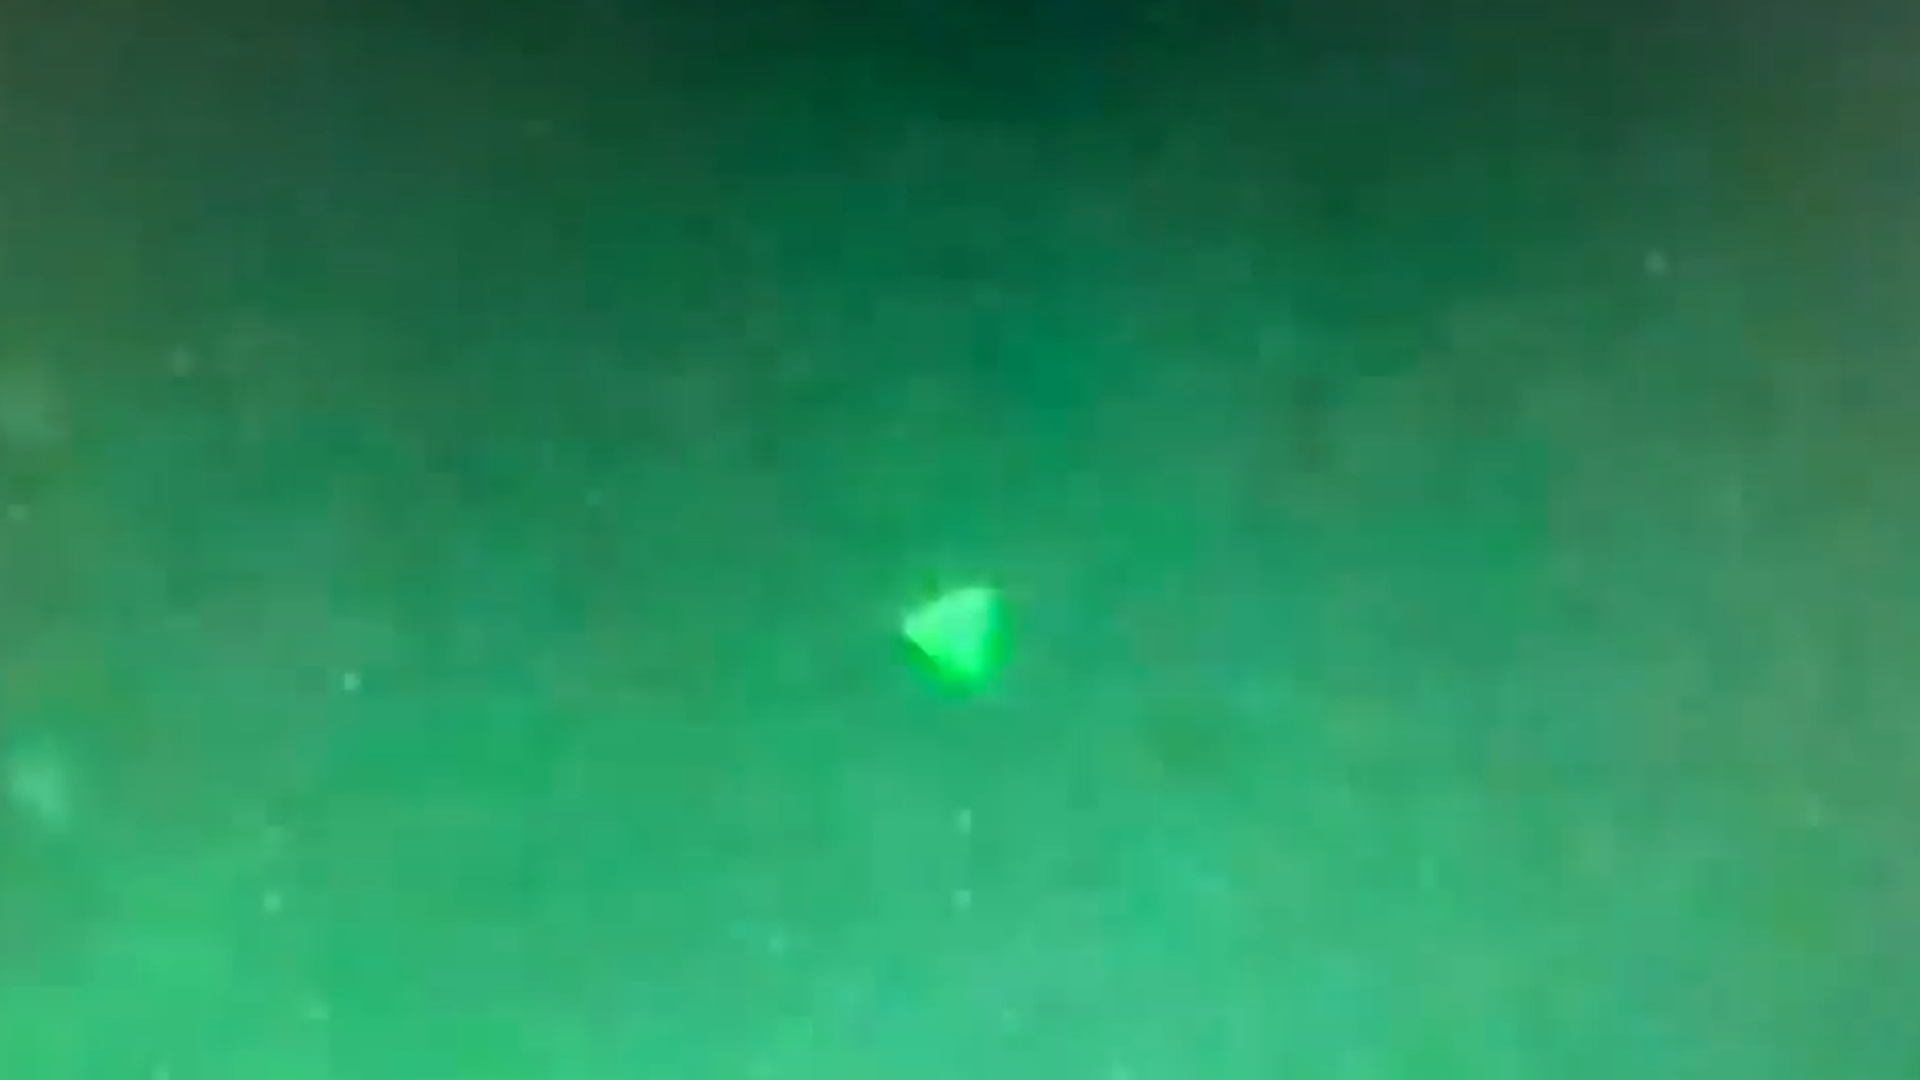 Pentagon Verifies UFO Video Forward of Congressional Hearing